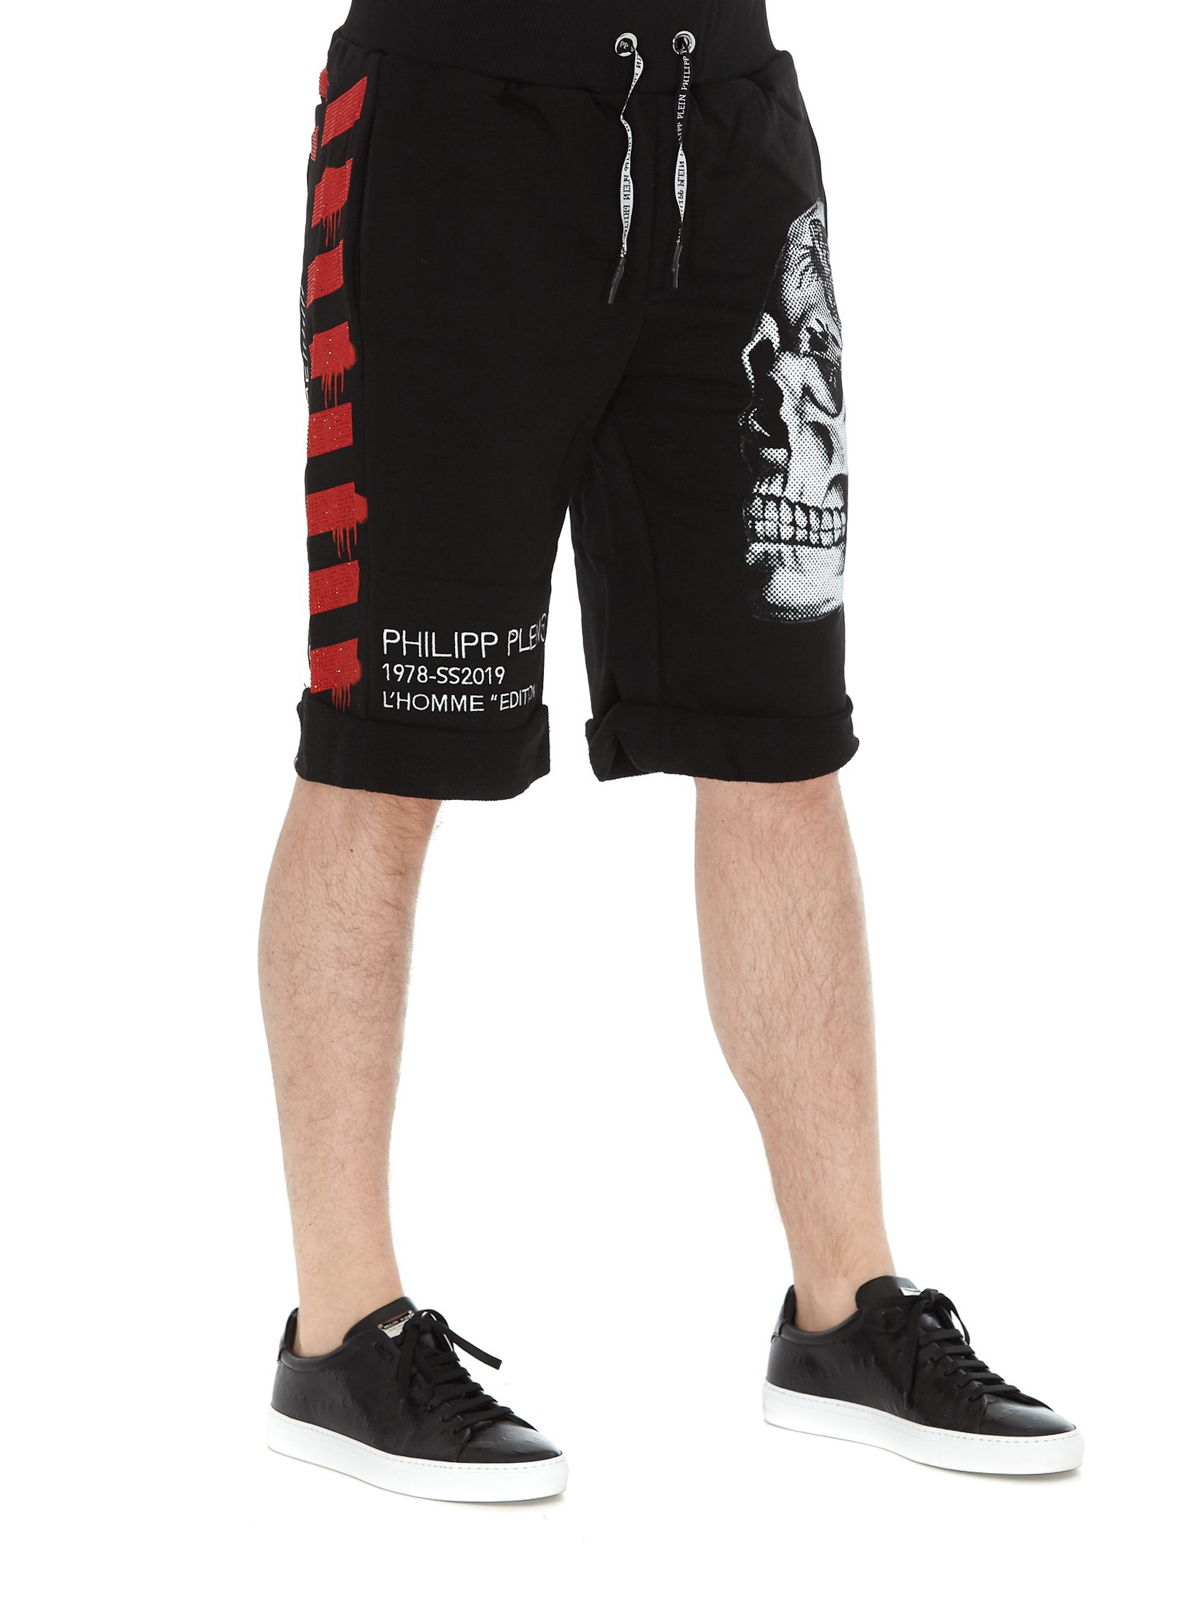 Zee evenaar Booth Trousers Shorts Philipp Plein - Skull print cotton shorts -  MJT0896PJO002N0213